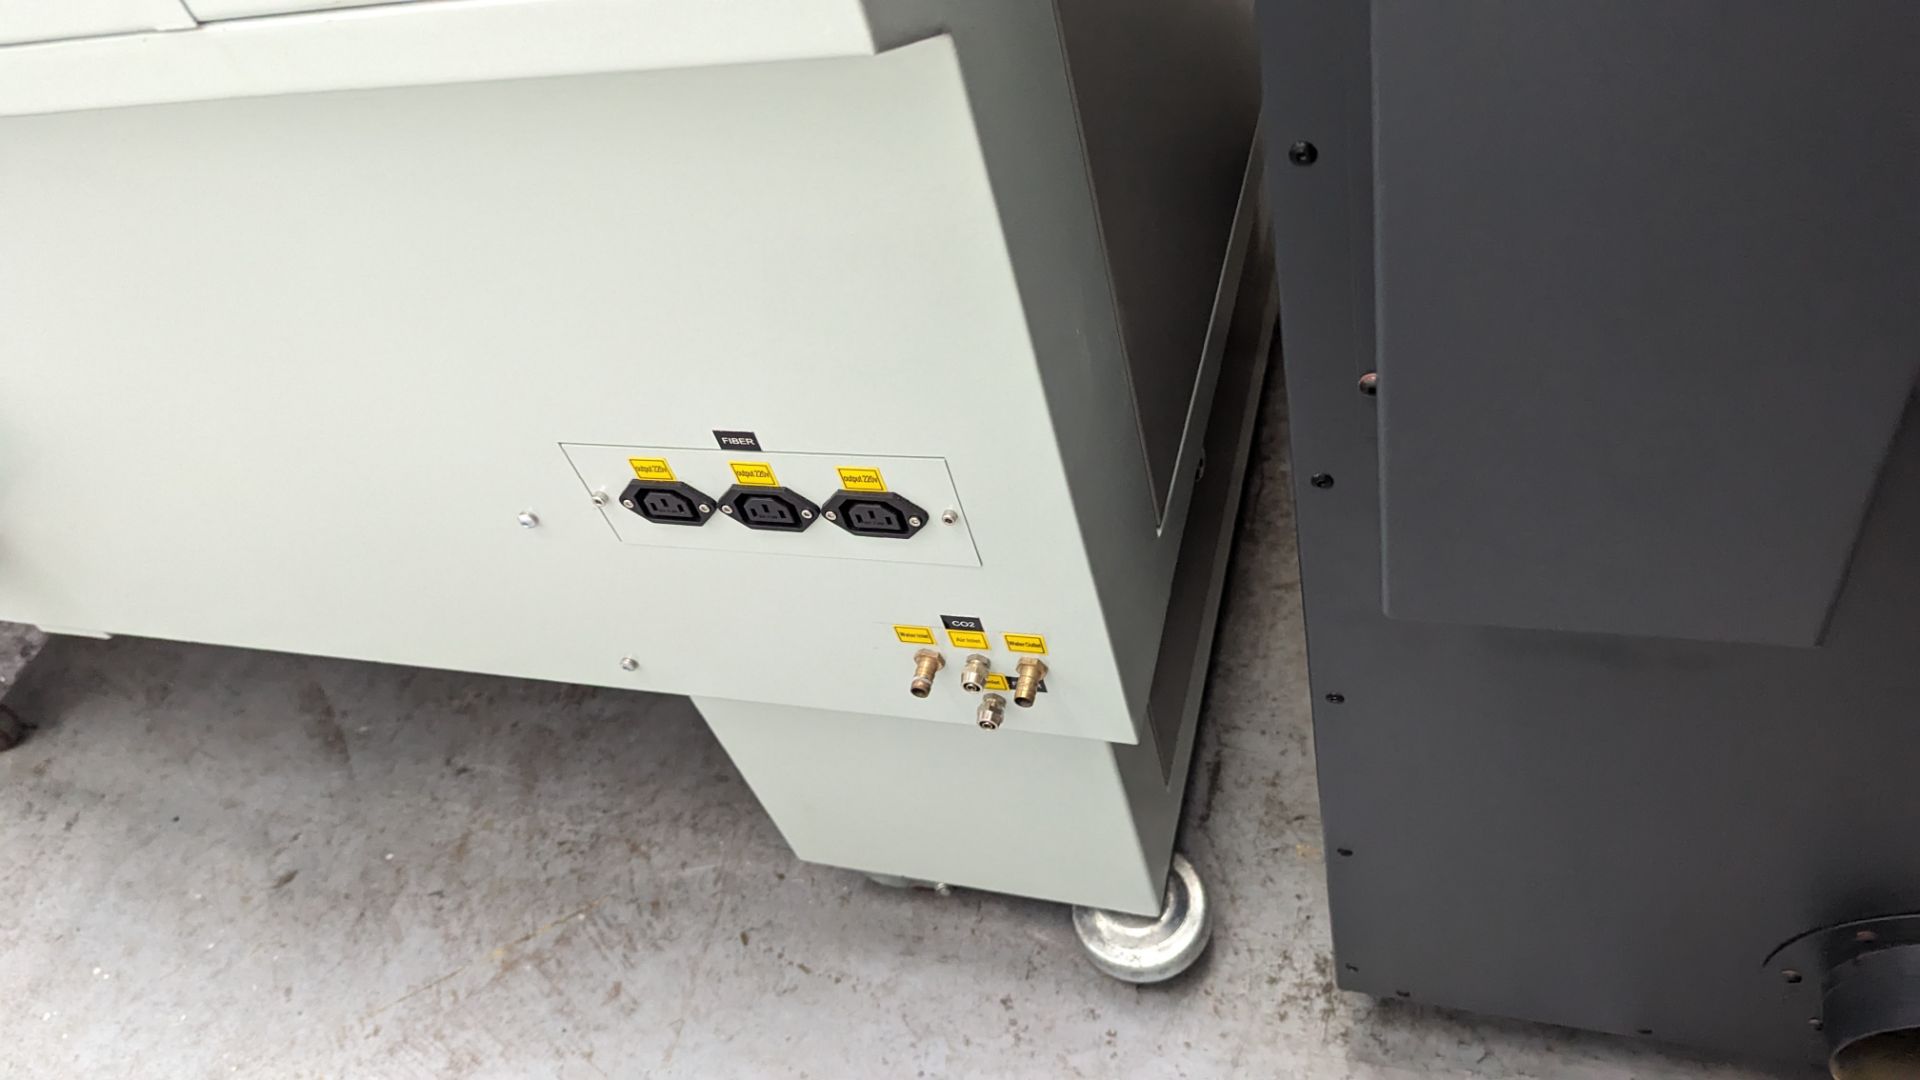 2021 Thinklaser Lightblade 6090 laser engraving machine including dedicated extraction system. - Image 49 of 49